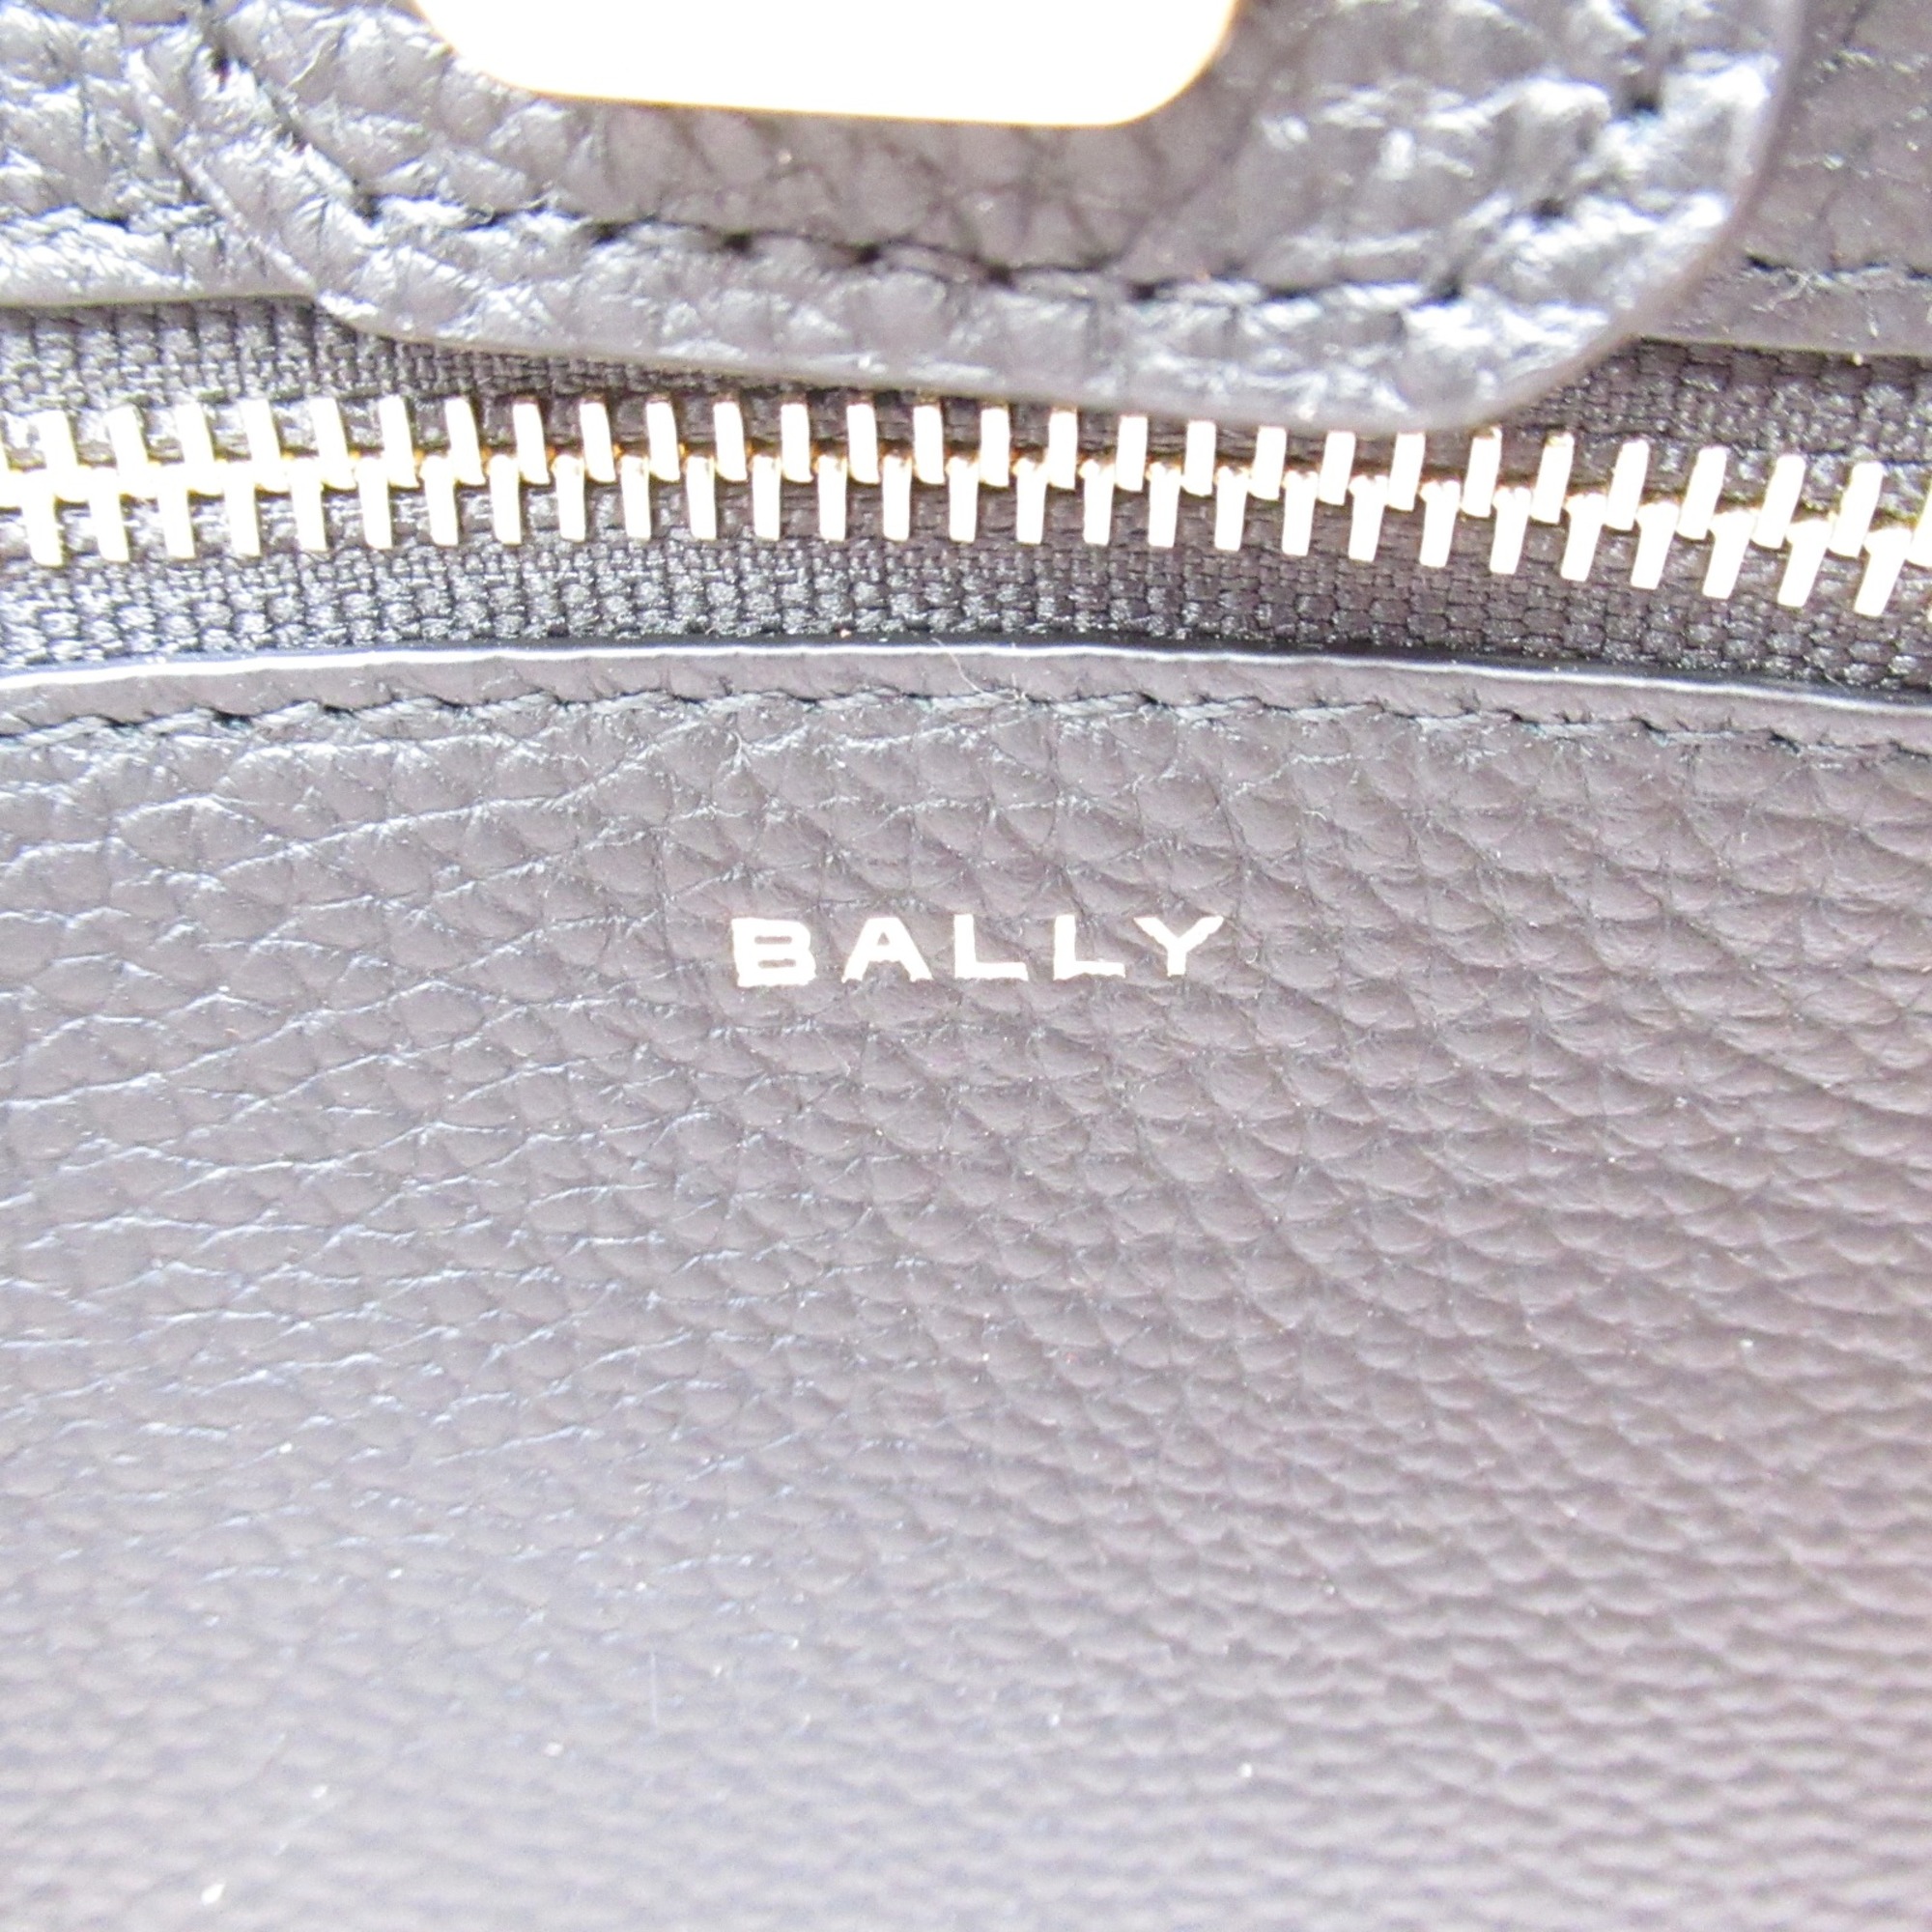 BALLY 2wayShoulder Bag BAR KEEP ON XS Beige Black Fa Brique leather 6304520